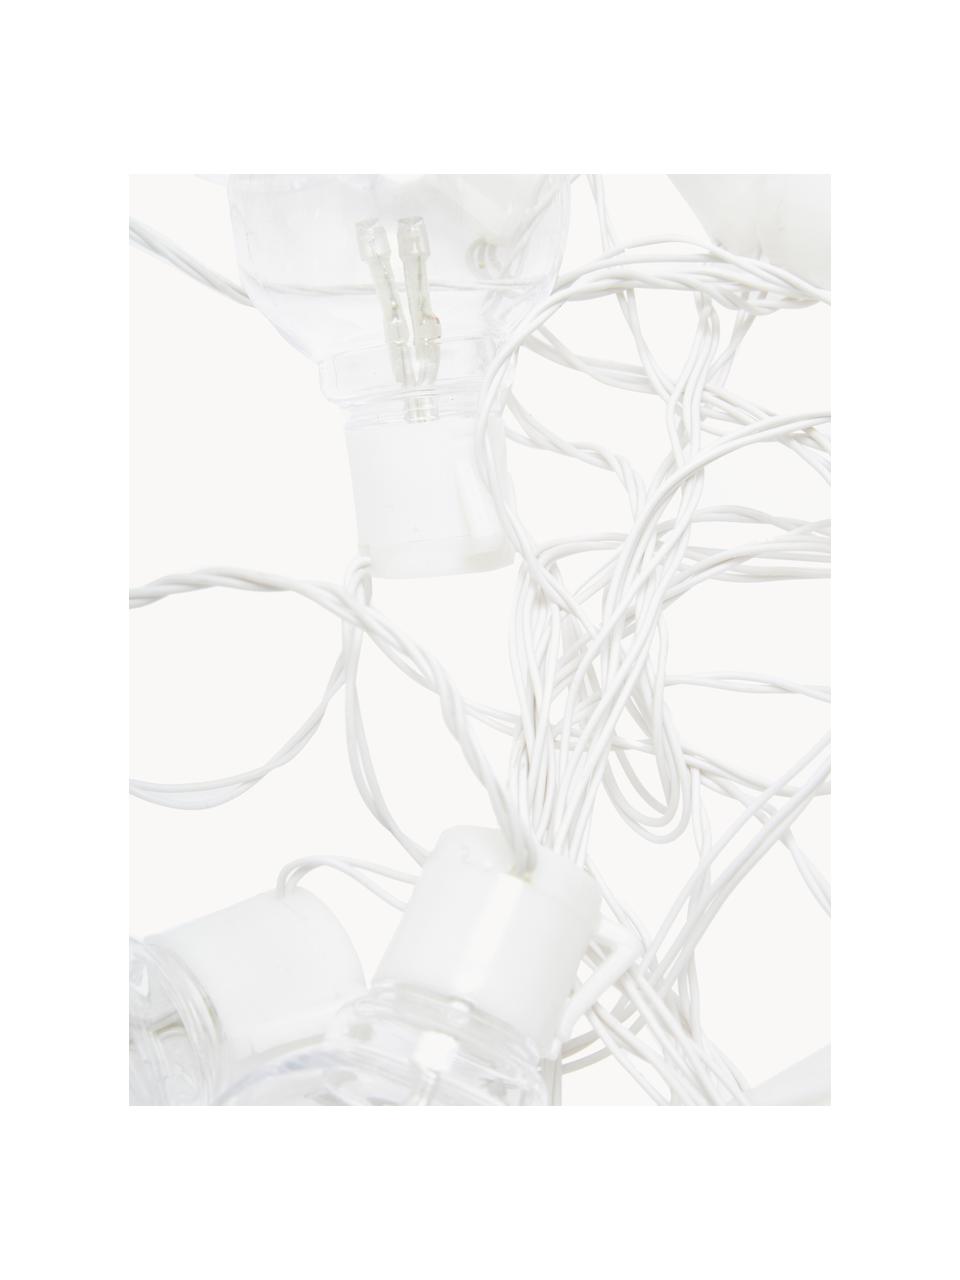 Ghirlanda a LED da esterno Partaj, Bianco trasparente, Lung. 950 cm